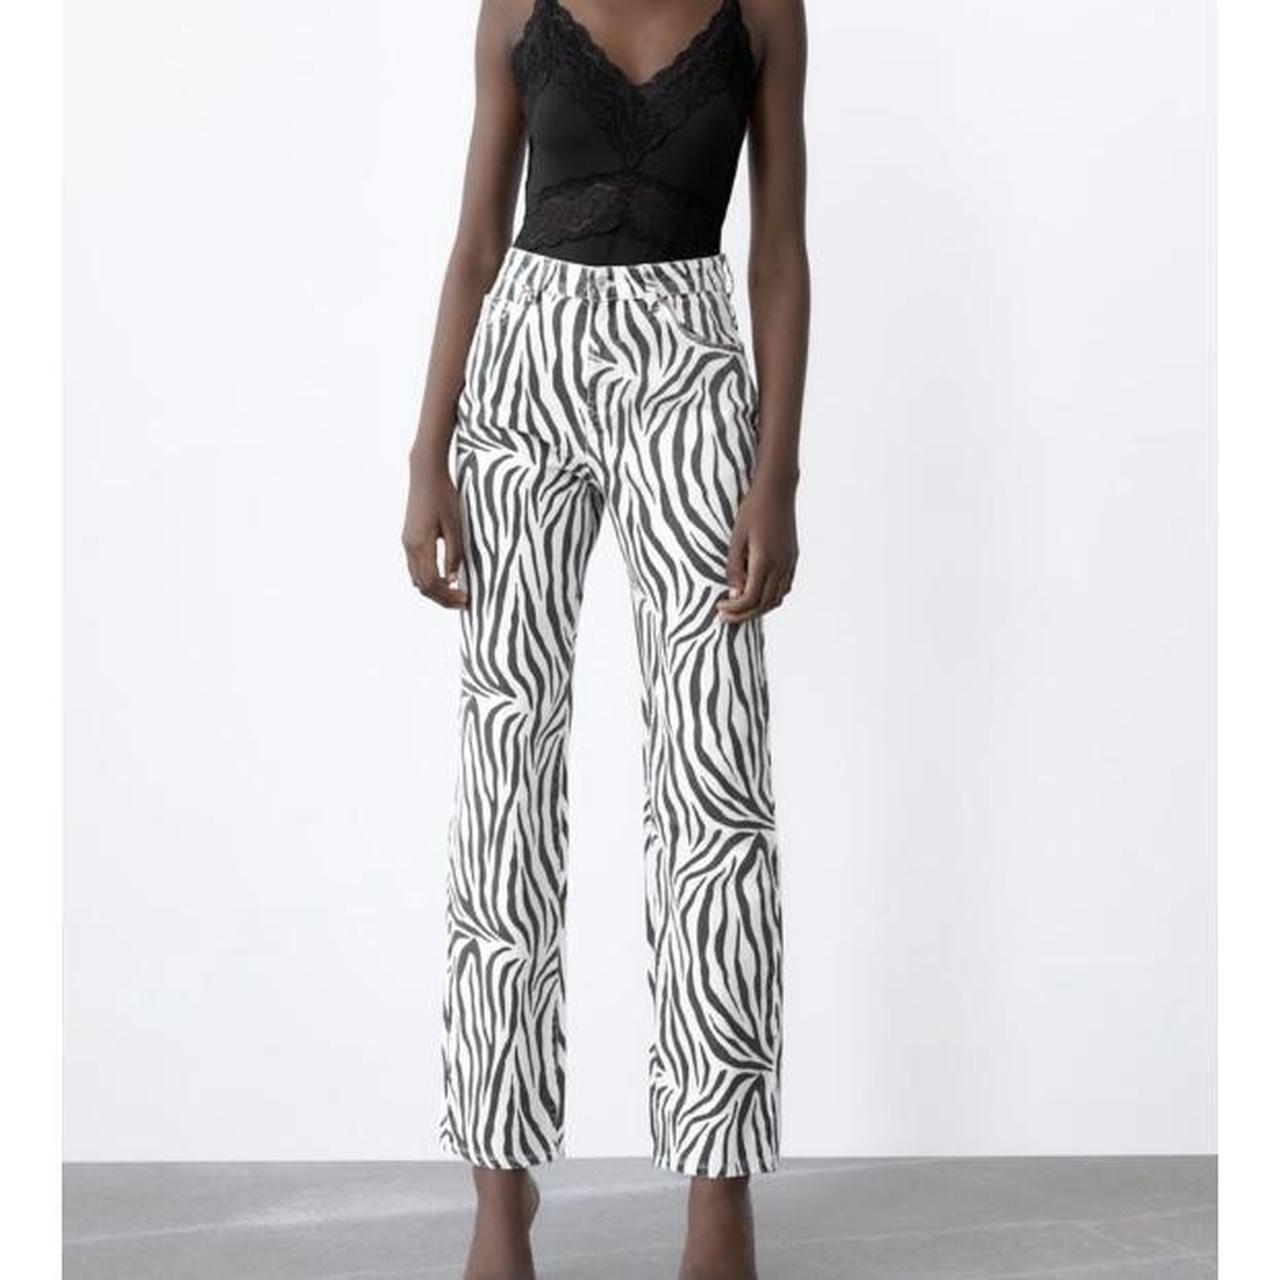 NWT Bershka wide leg zebra print pants with strap detail in brown Size  Small | eBay